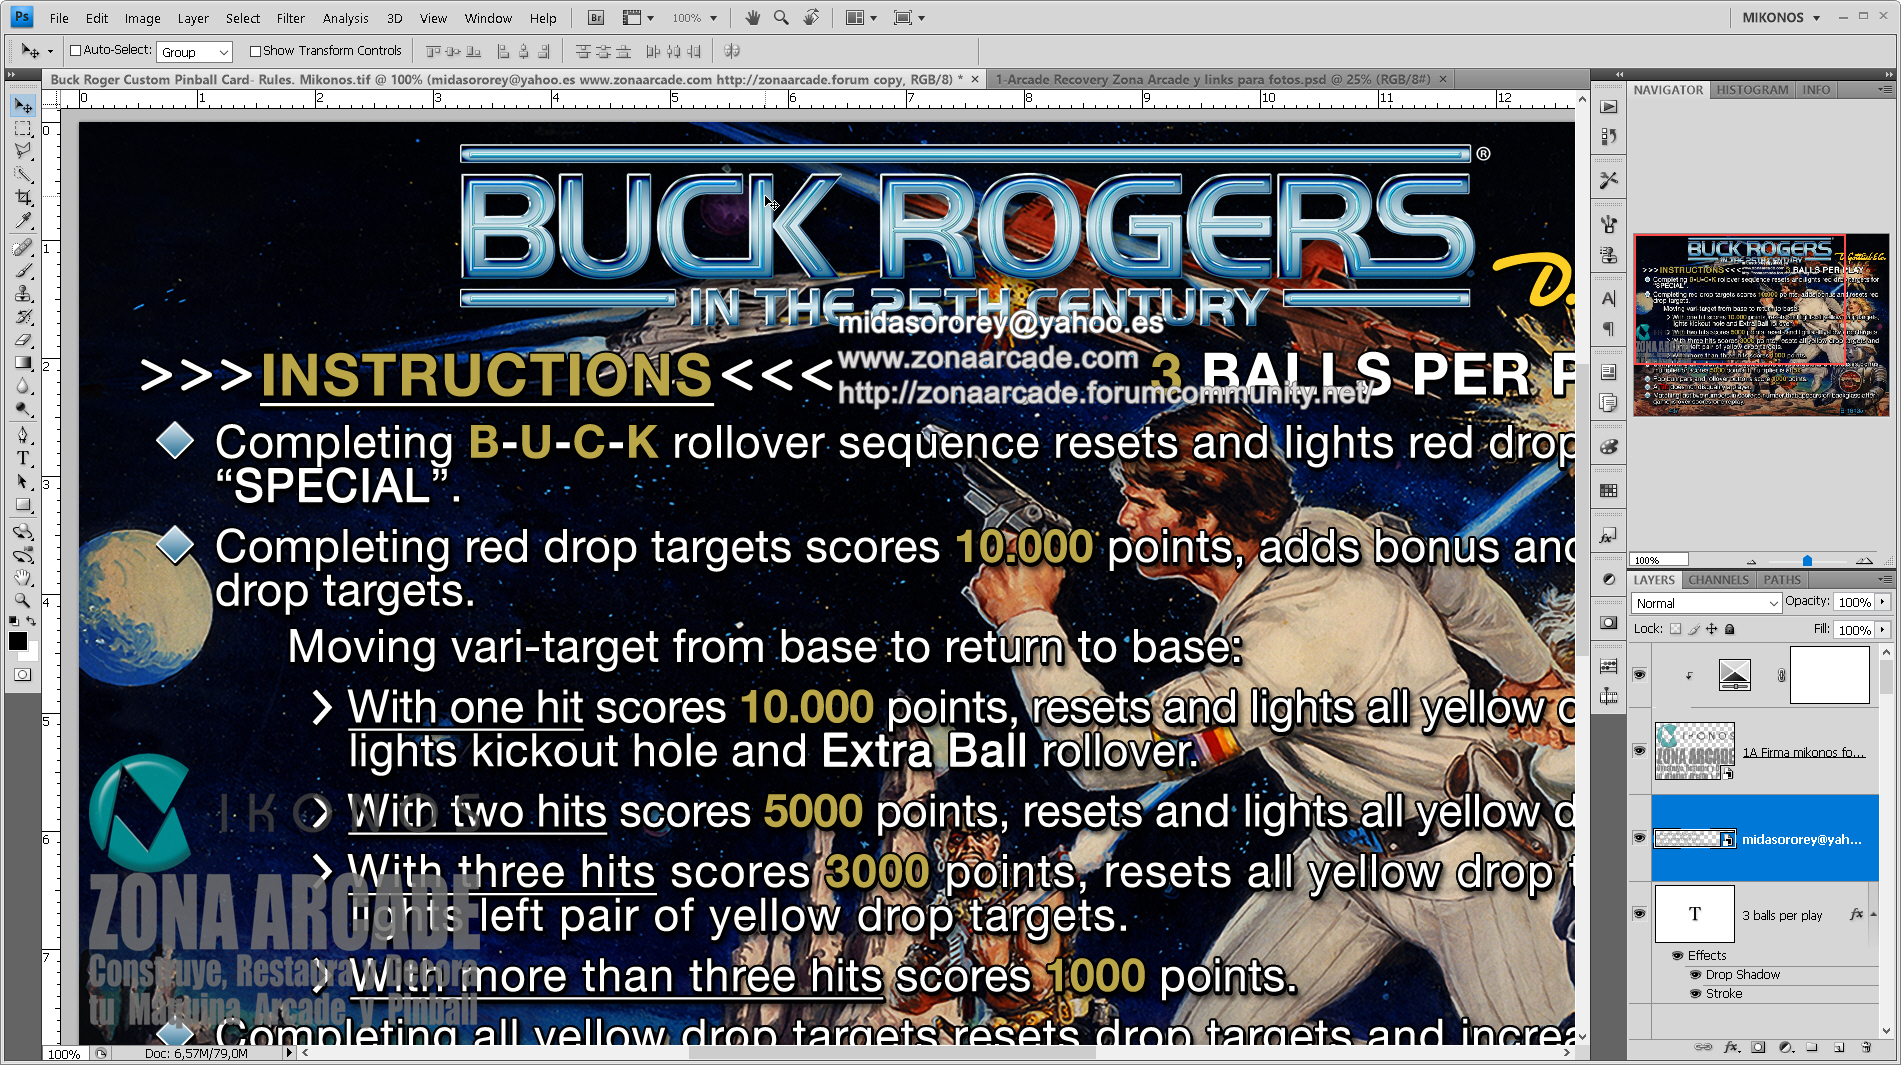 Buck Rogers Pinball Card Customized - Rules. Mikonos1